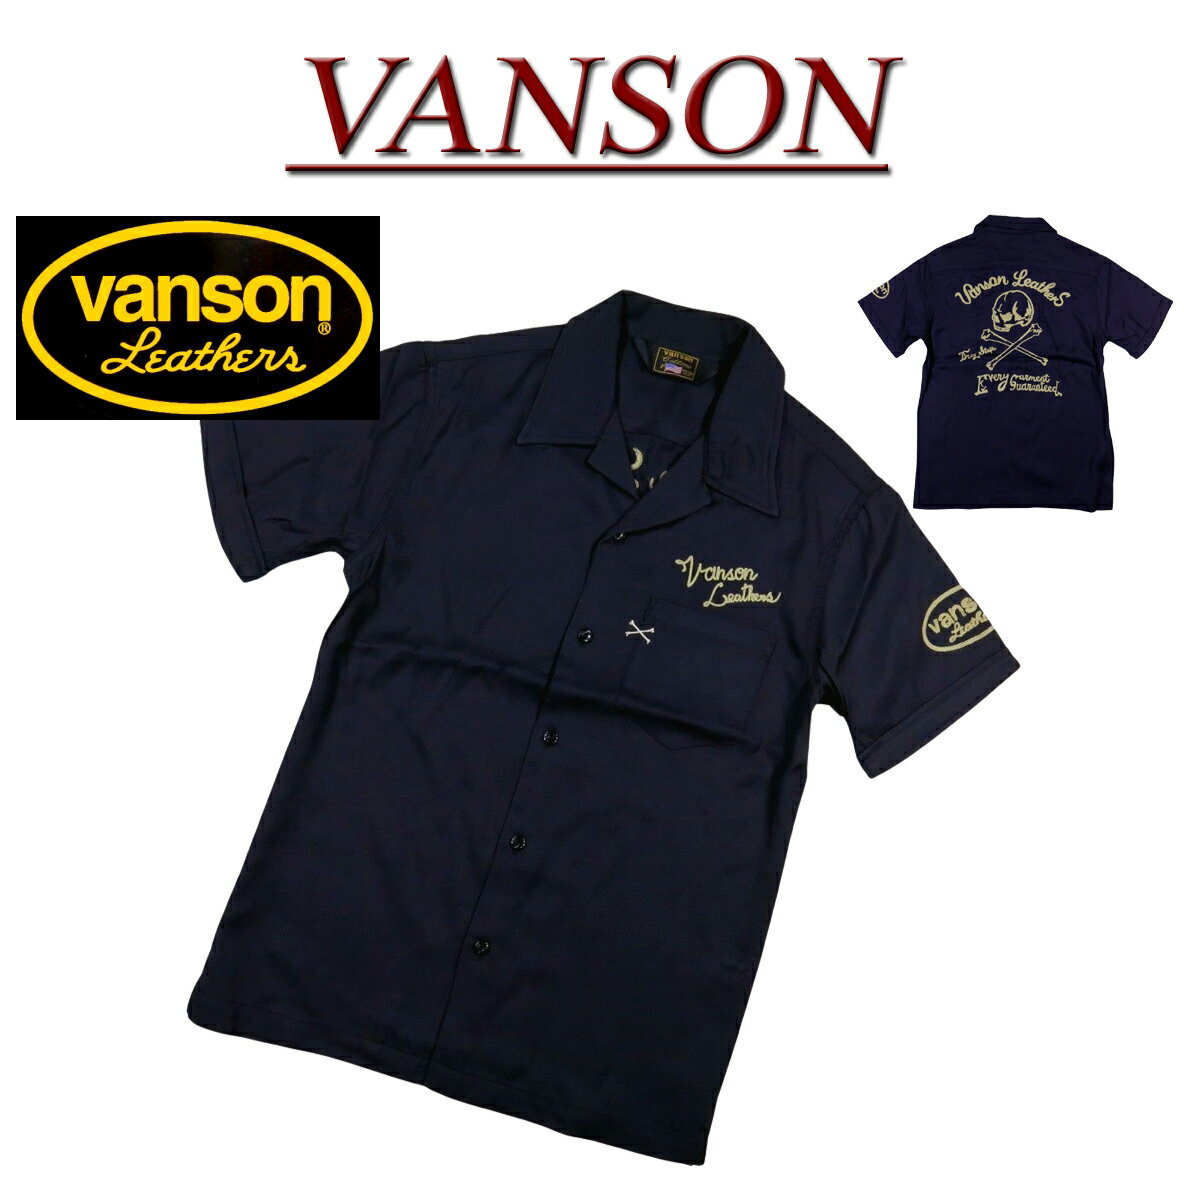  nc131 新品 VANSON スカル クロスボーン チェーン刺繍 半袖 レーヨン ボーリングシャツ NVSS-2101 メンズ バンソン SKULL CROSSBONE S/S RAYON BOWLING SHIRT ドクロ ボウリングシャツ ワークシャツ 